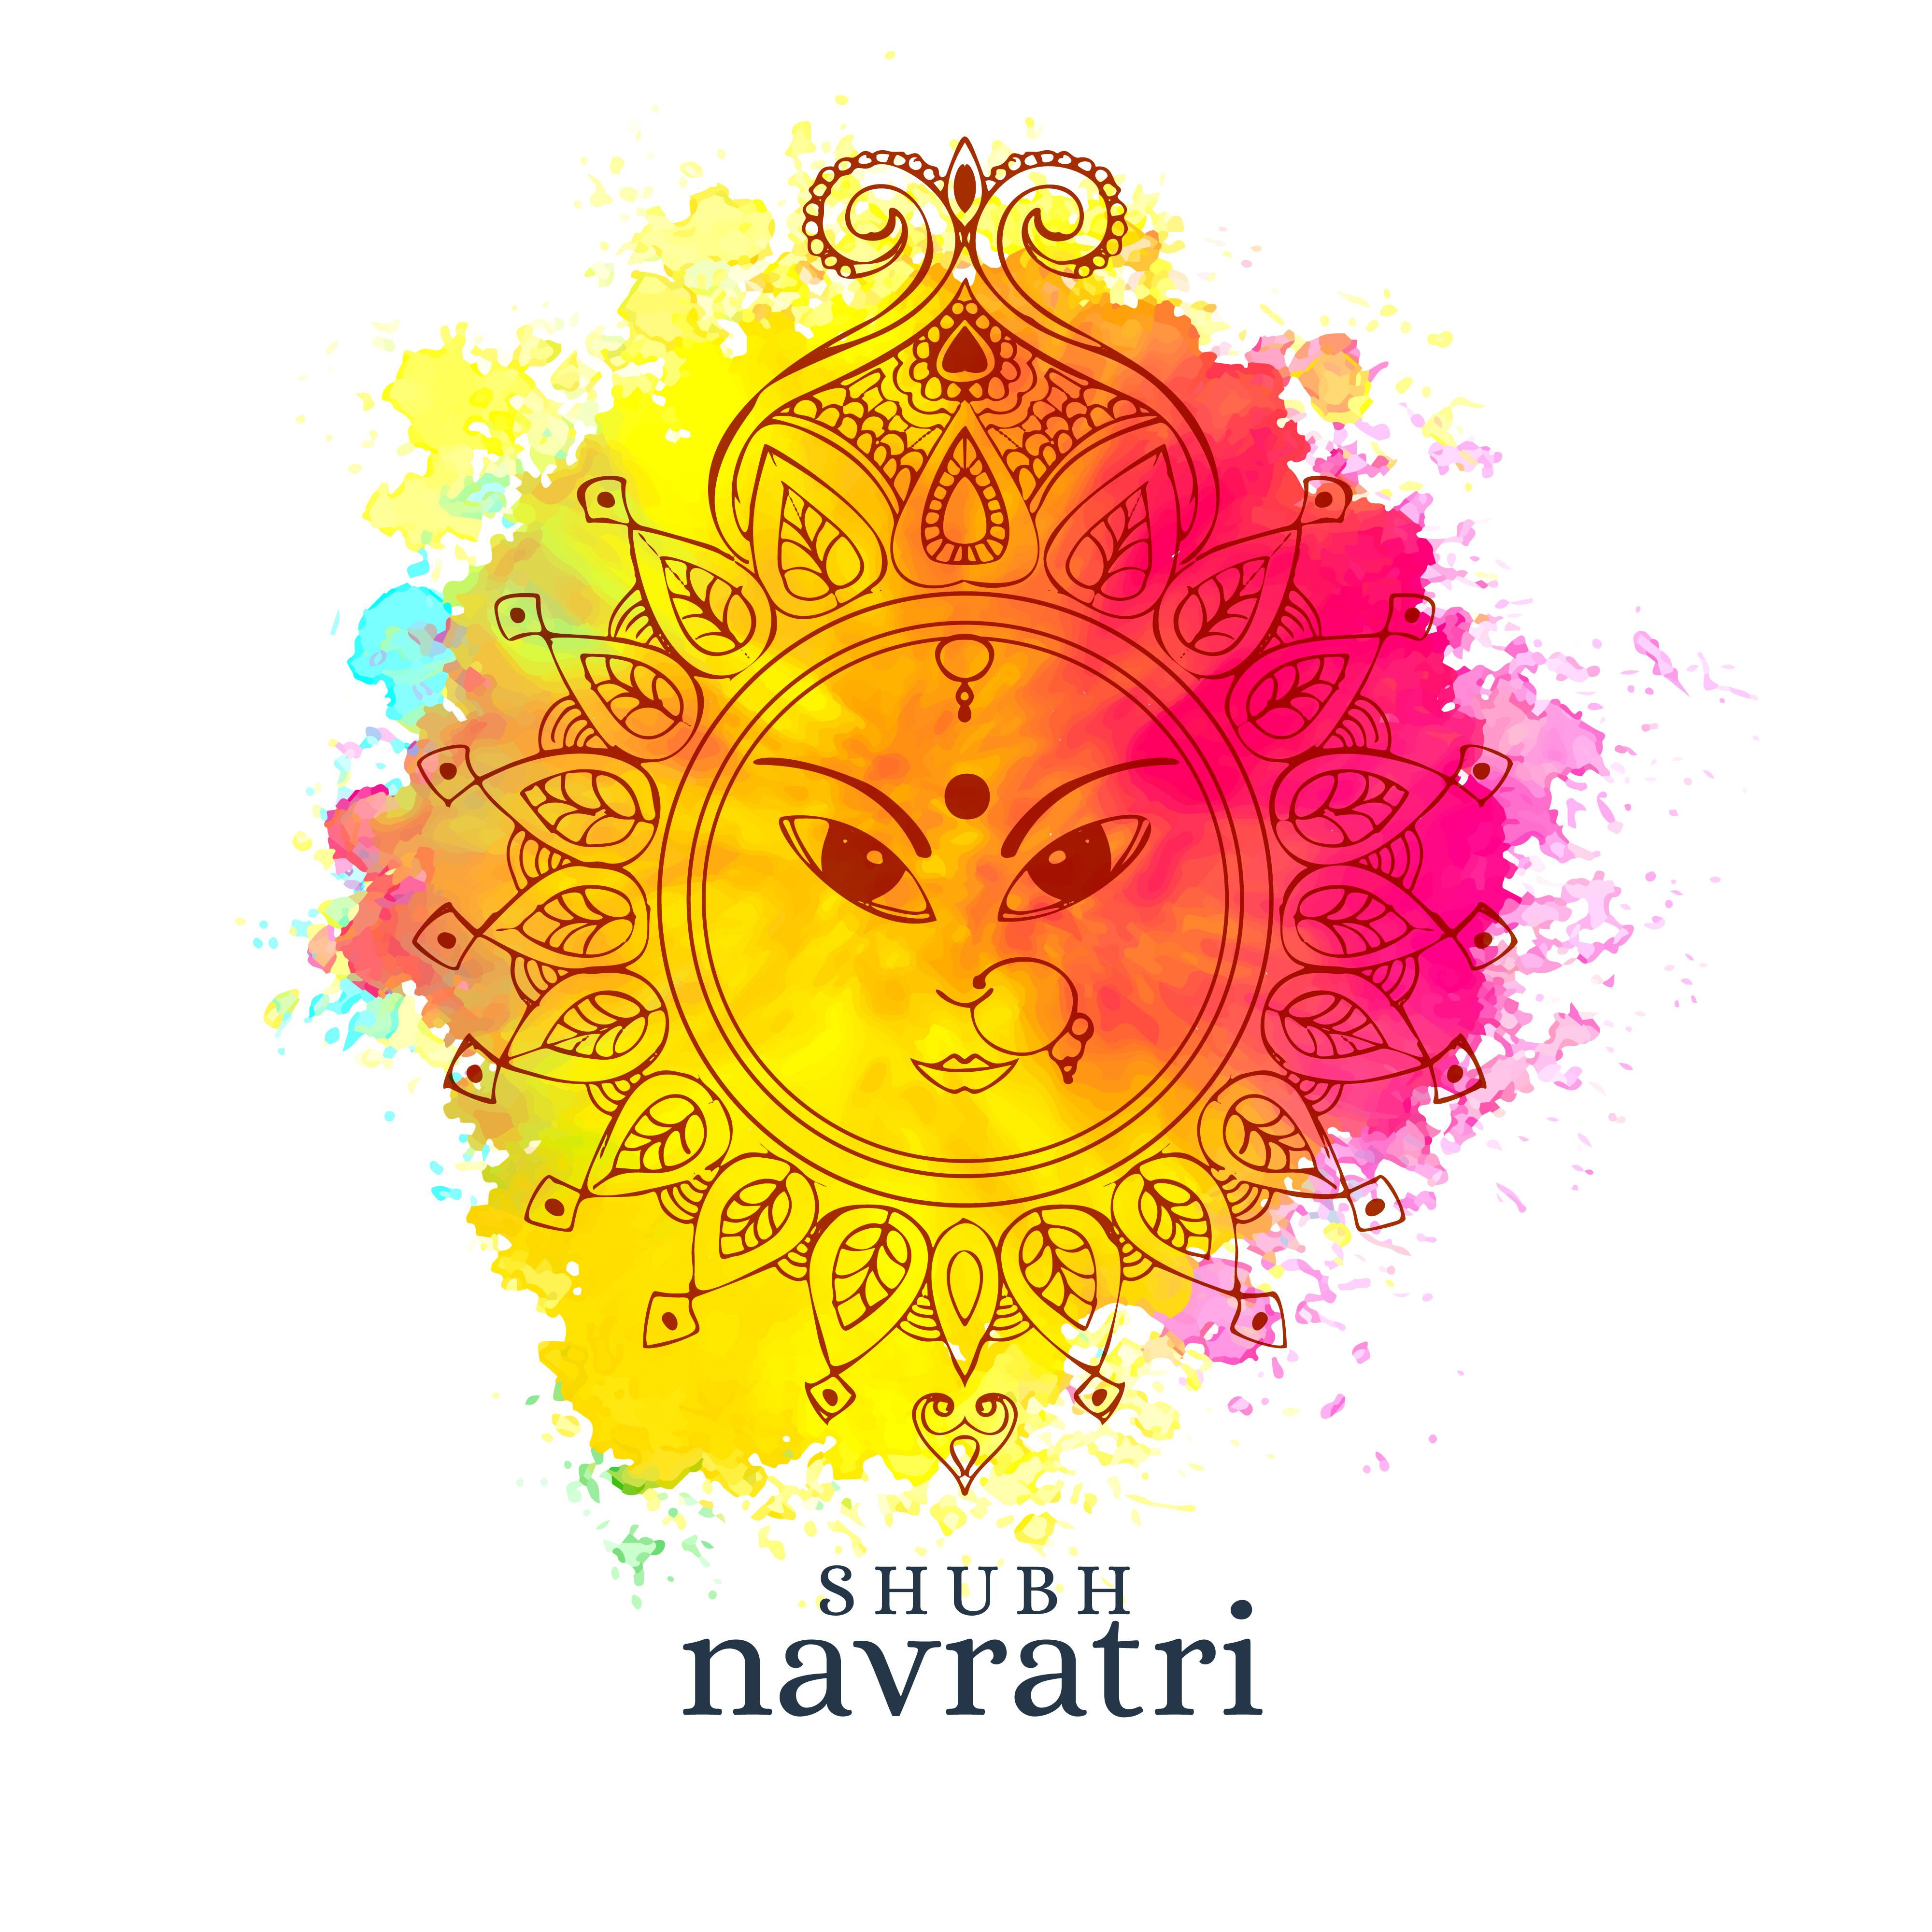 happy navratri illustration with maa durga face on 